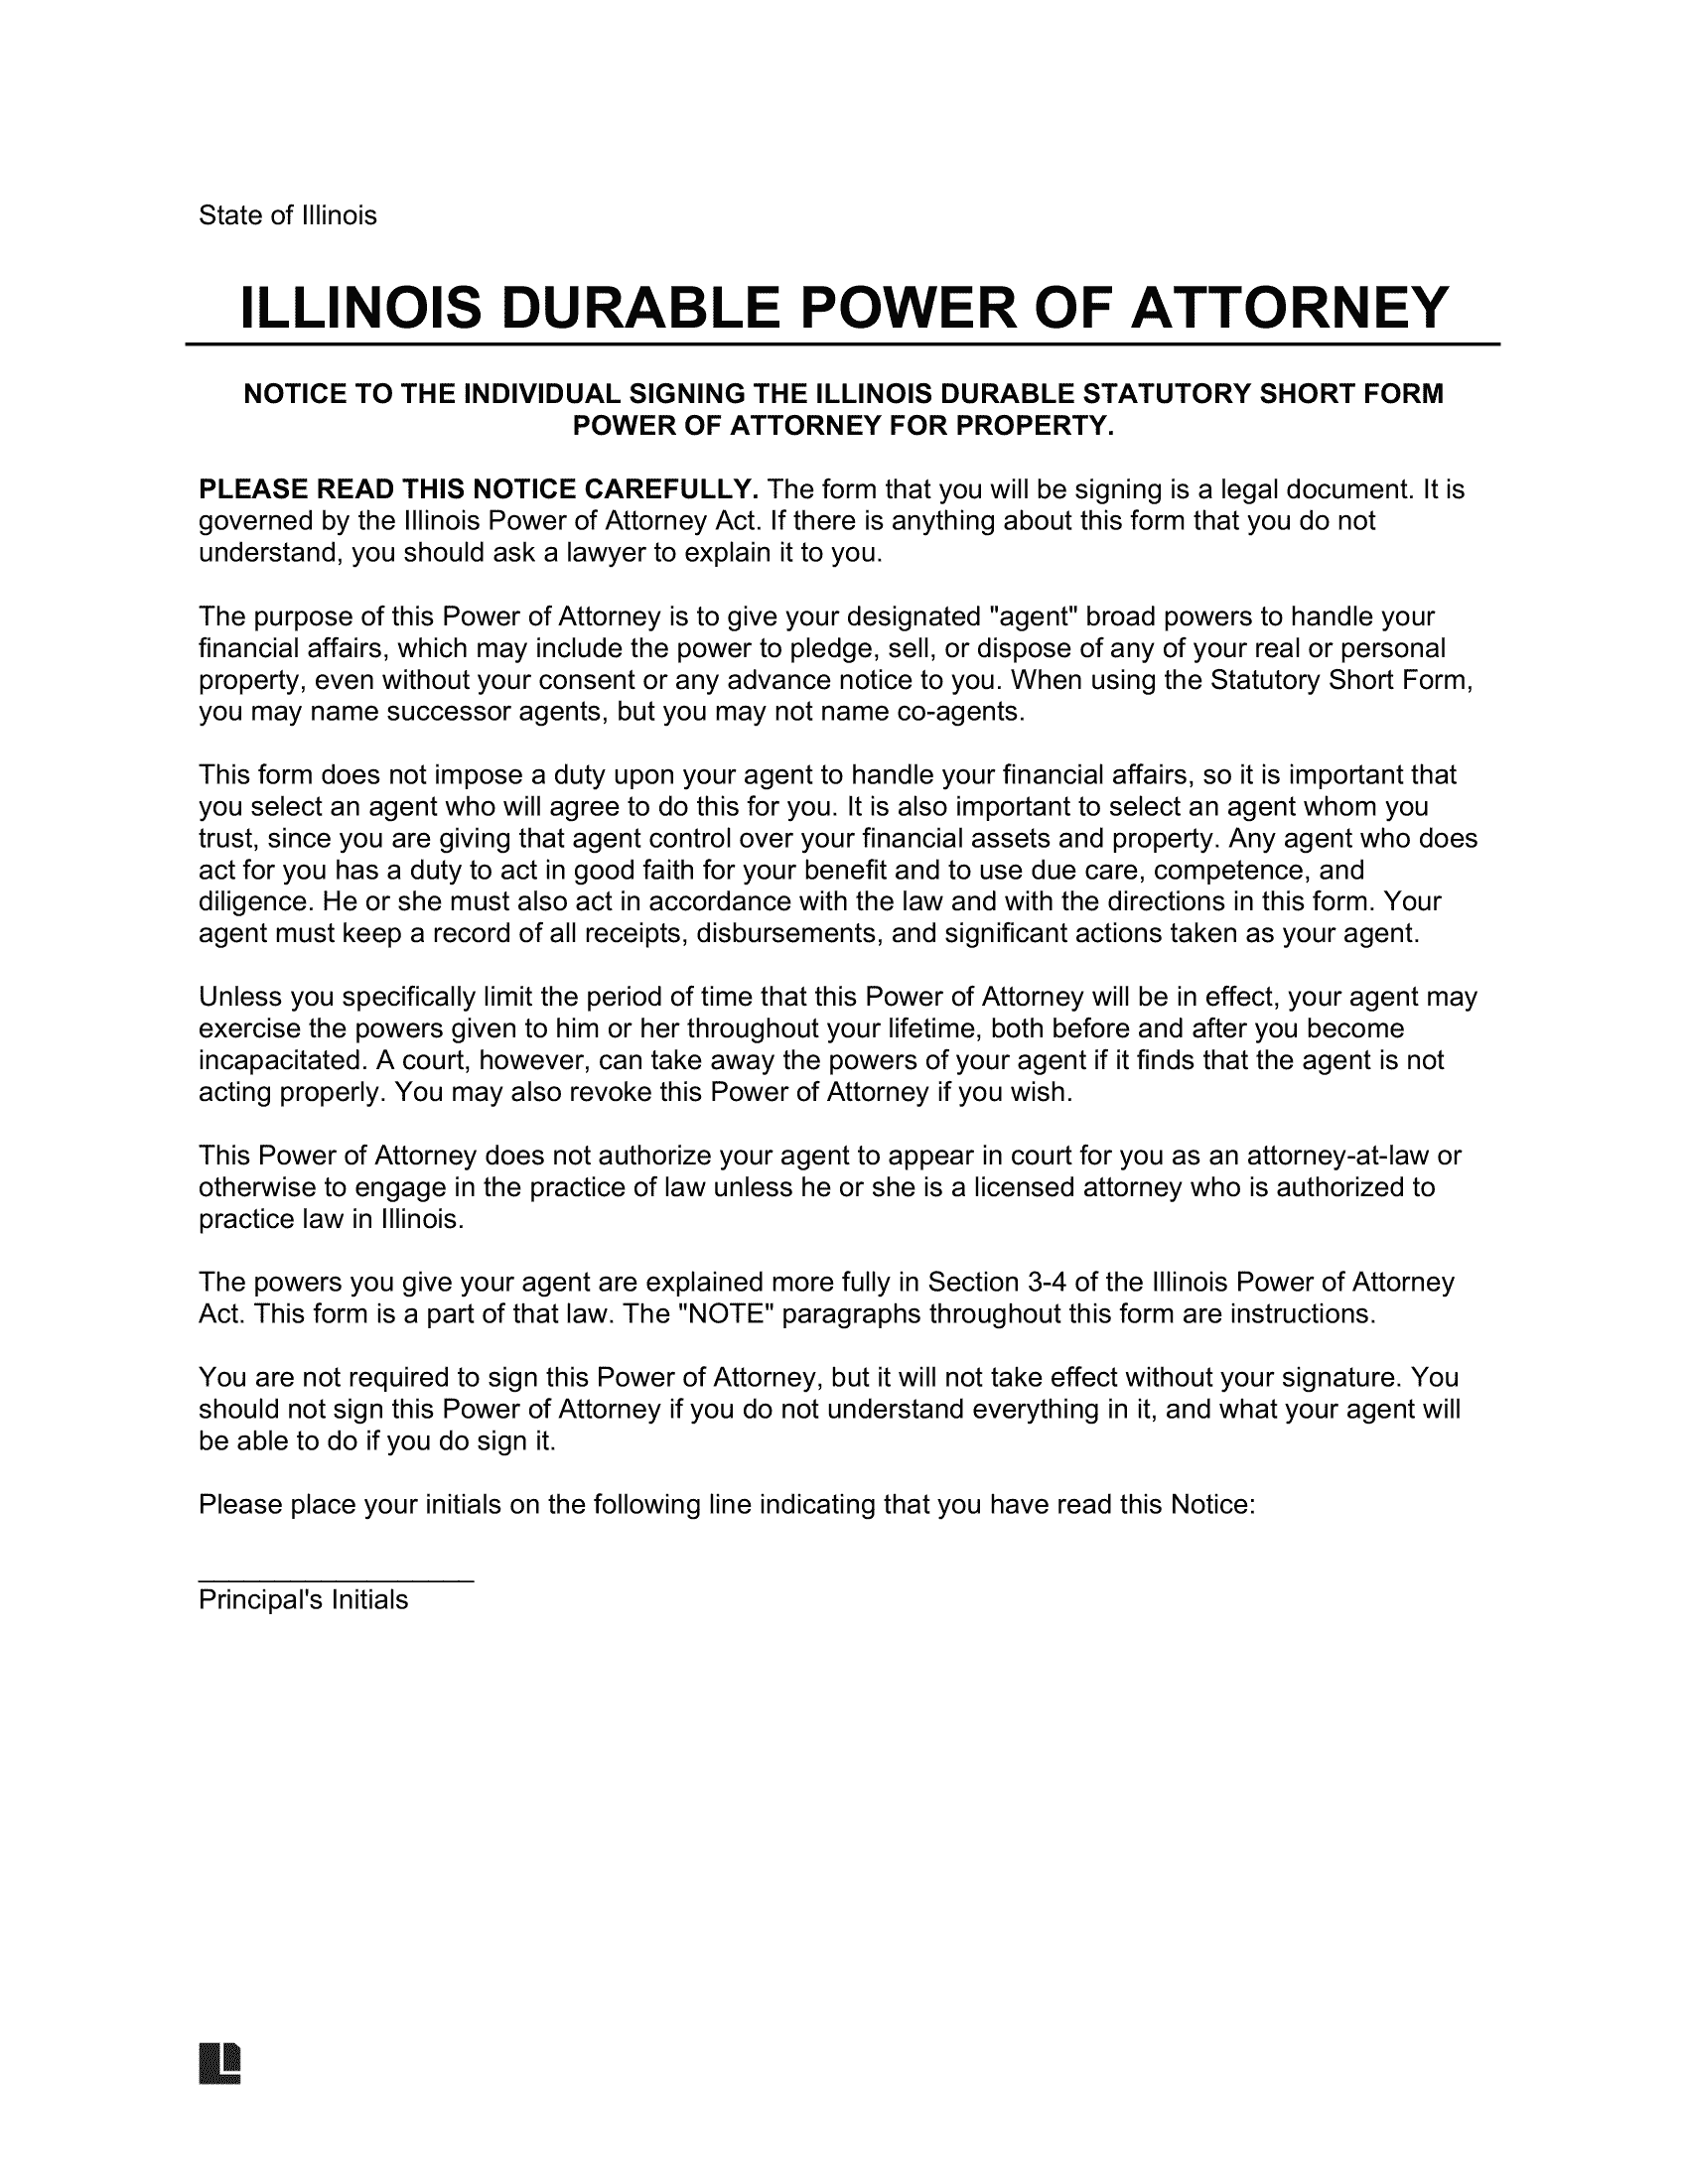 Illinois Durable Statutory Power of Attorney Template